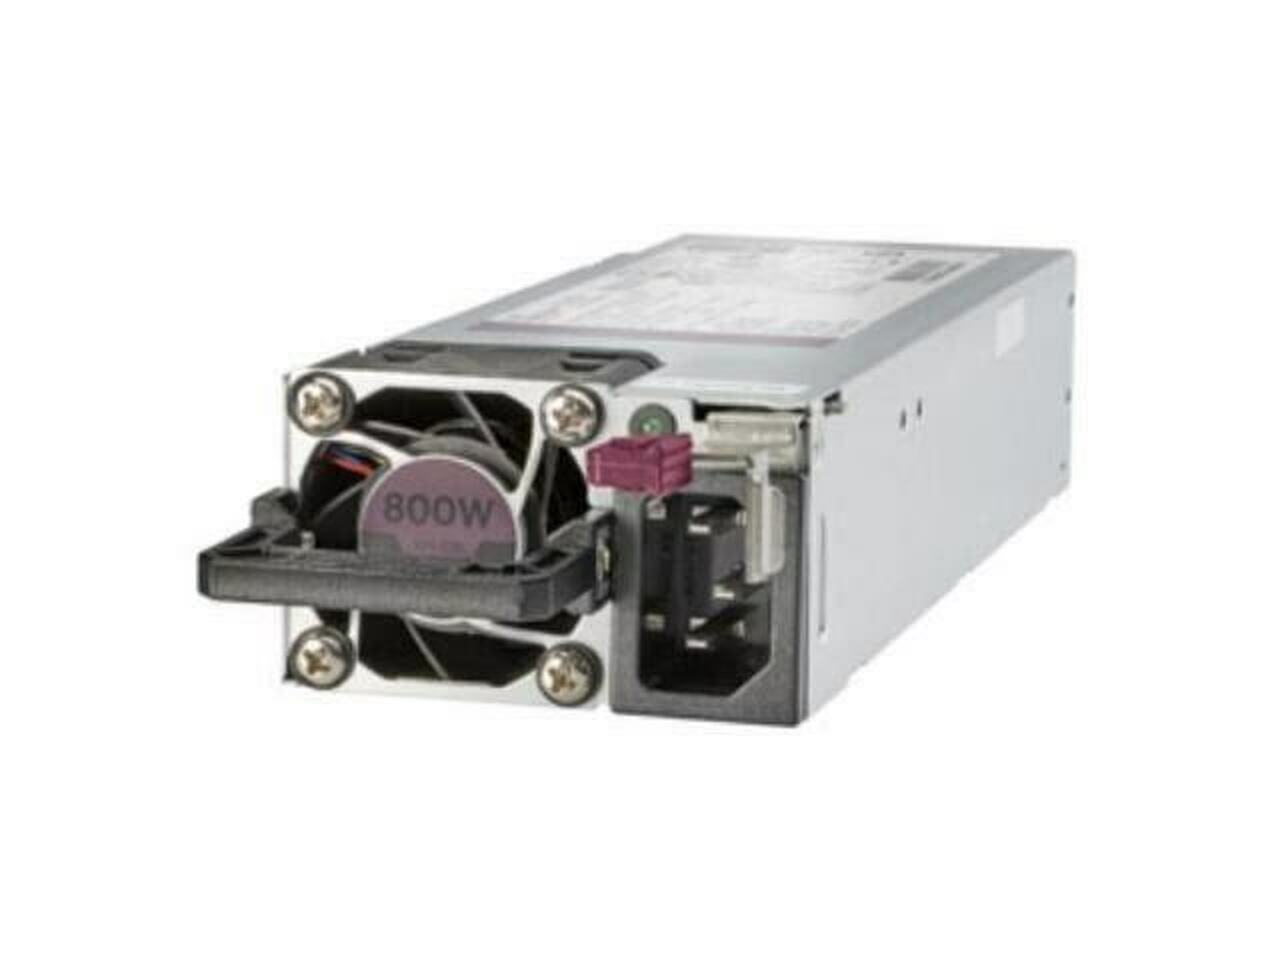 865434-B21 - HPE 800W Flex Slot -48VDC Hot Plug Low Halogen Power Supply Kit